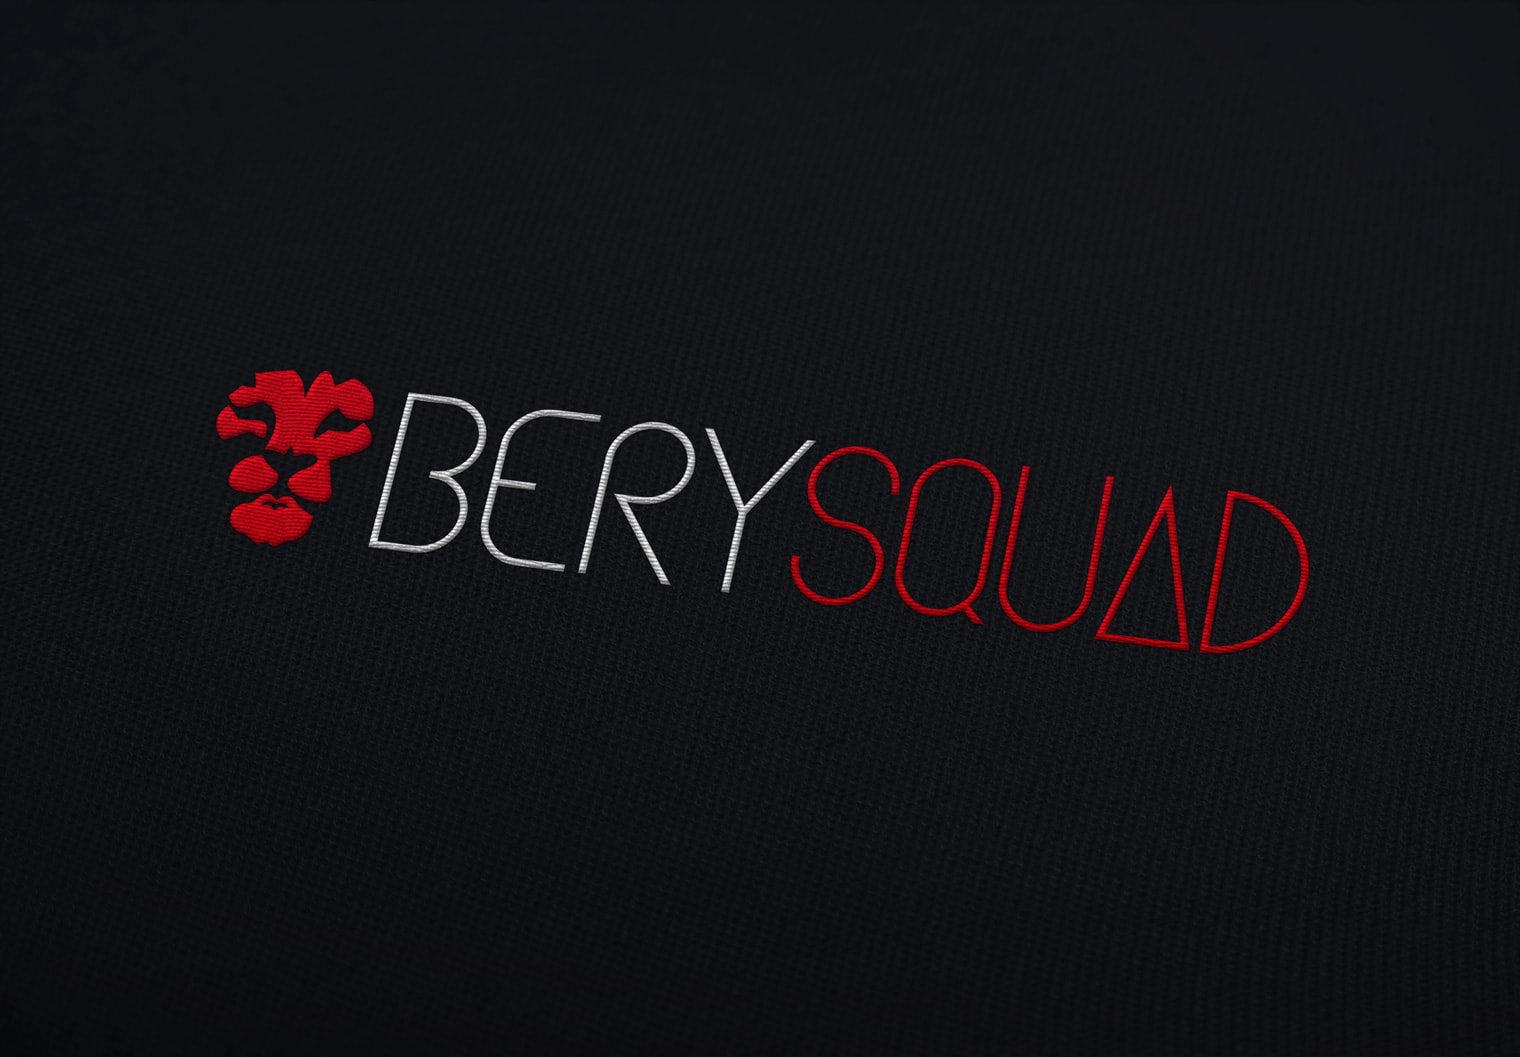 logo horizontal sur textile Berysquad